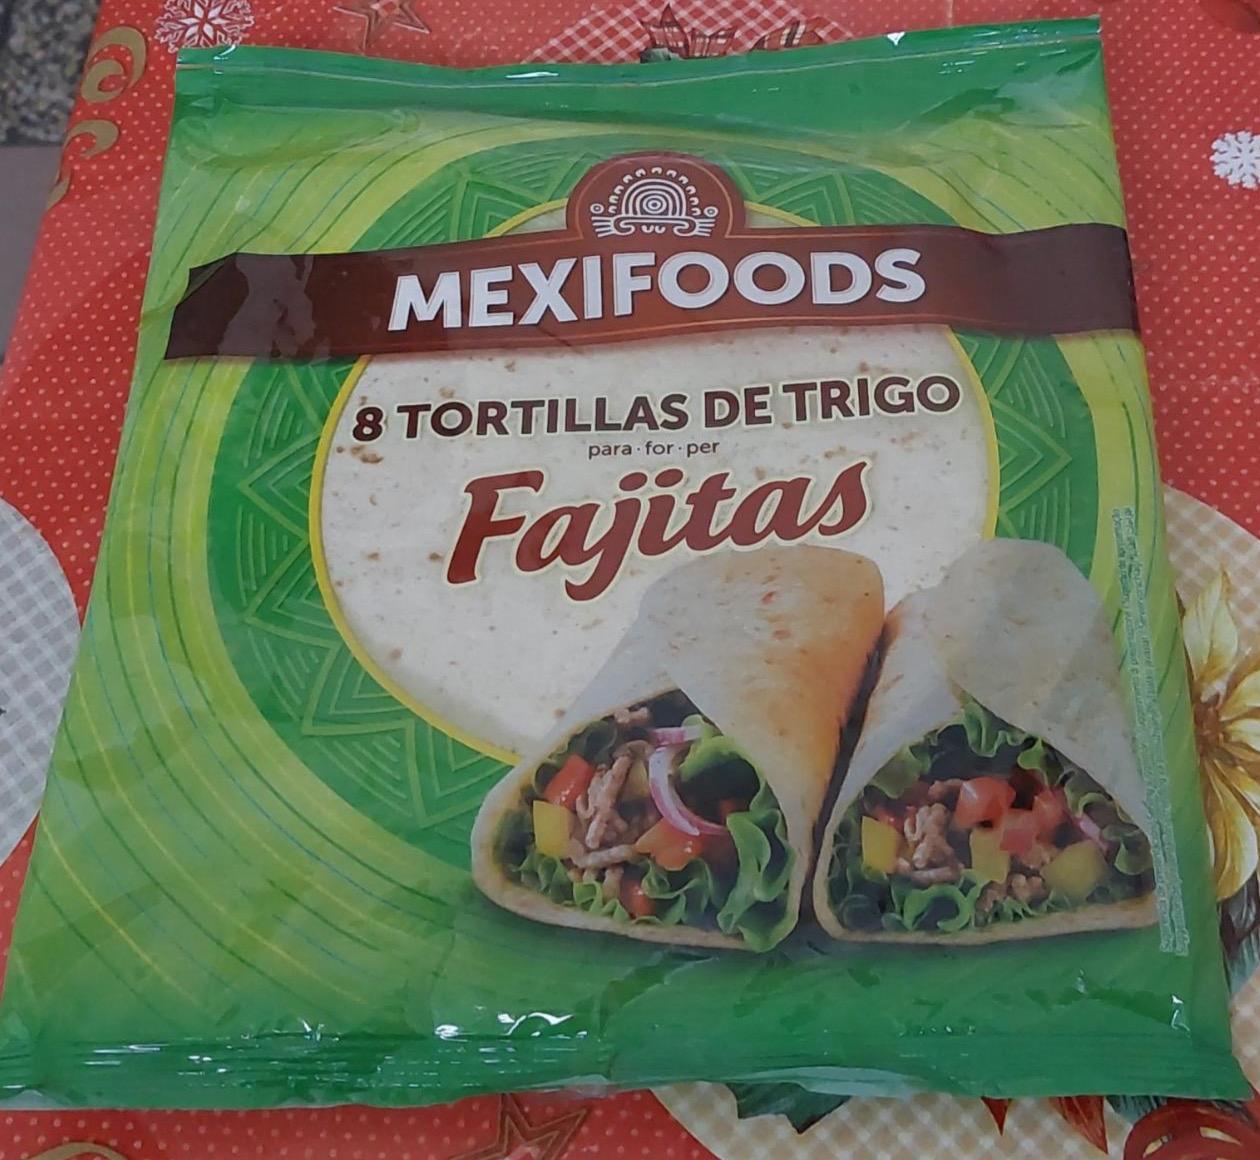 Képek - Tortillas de trigo Mexifoods